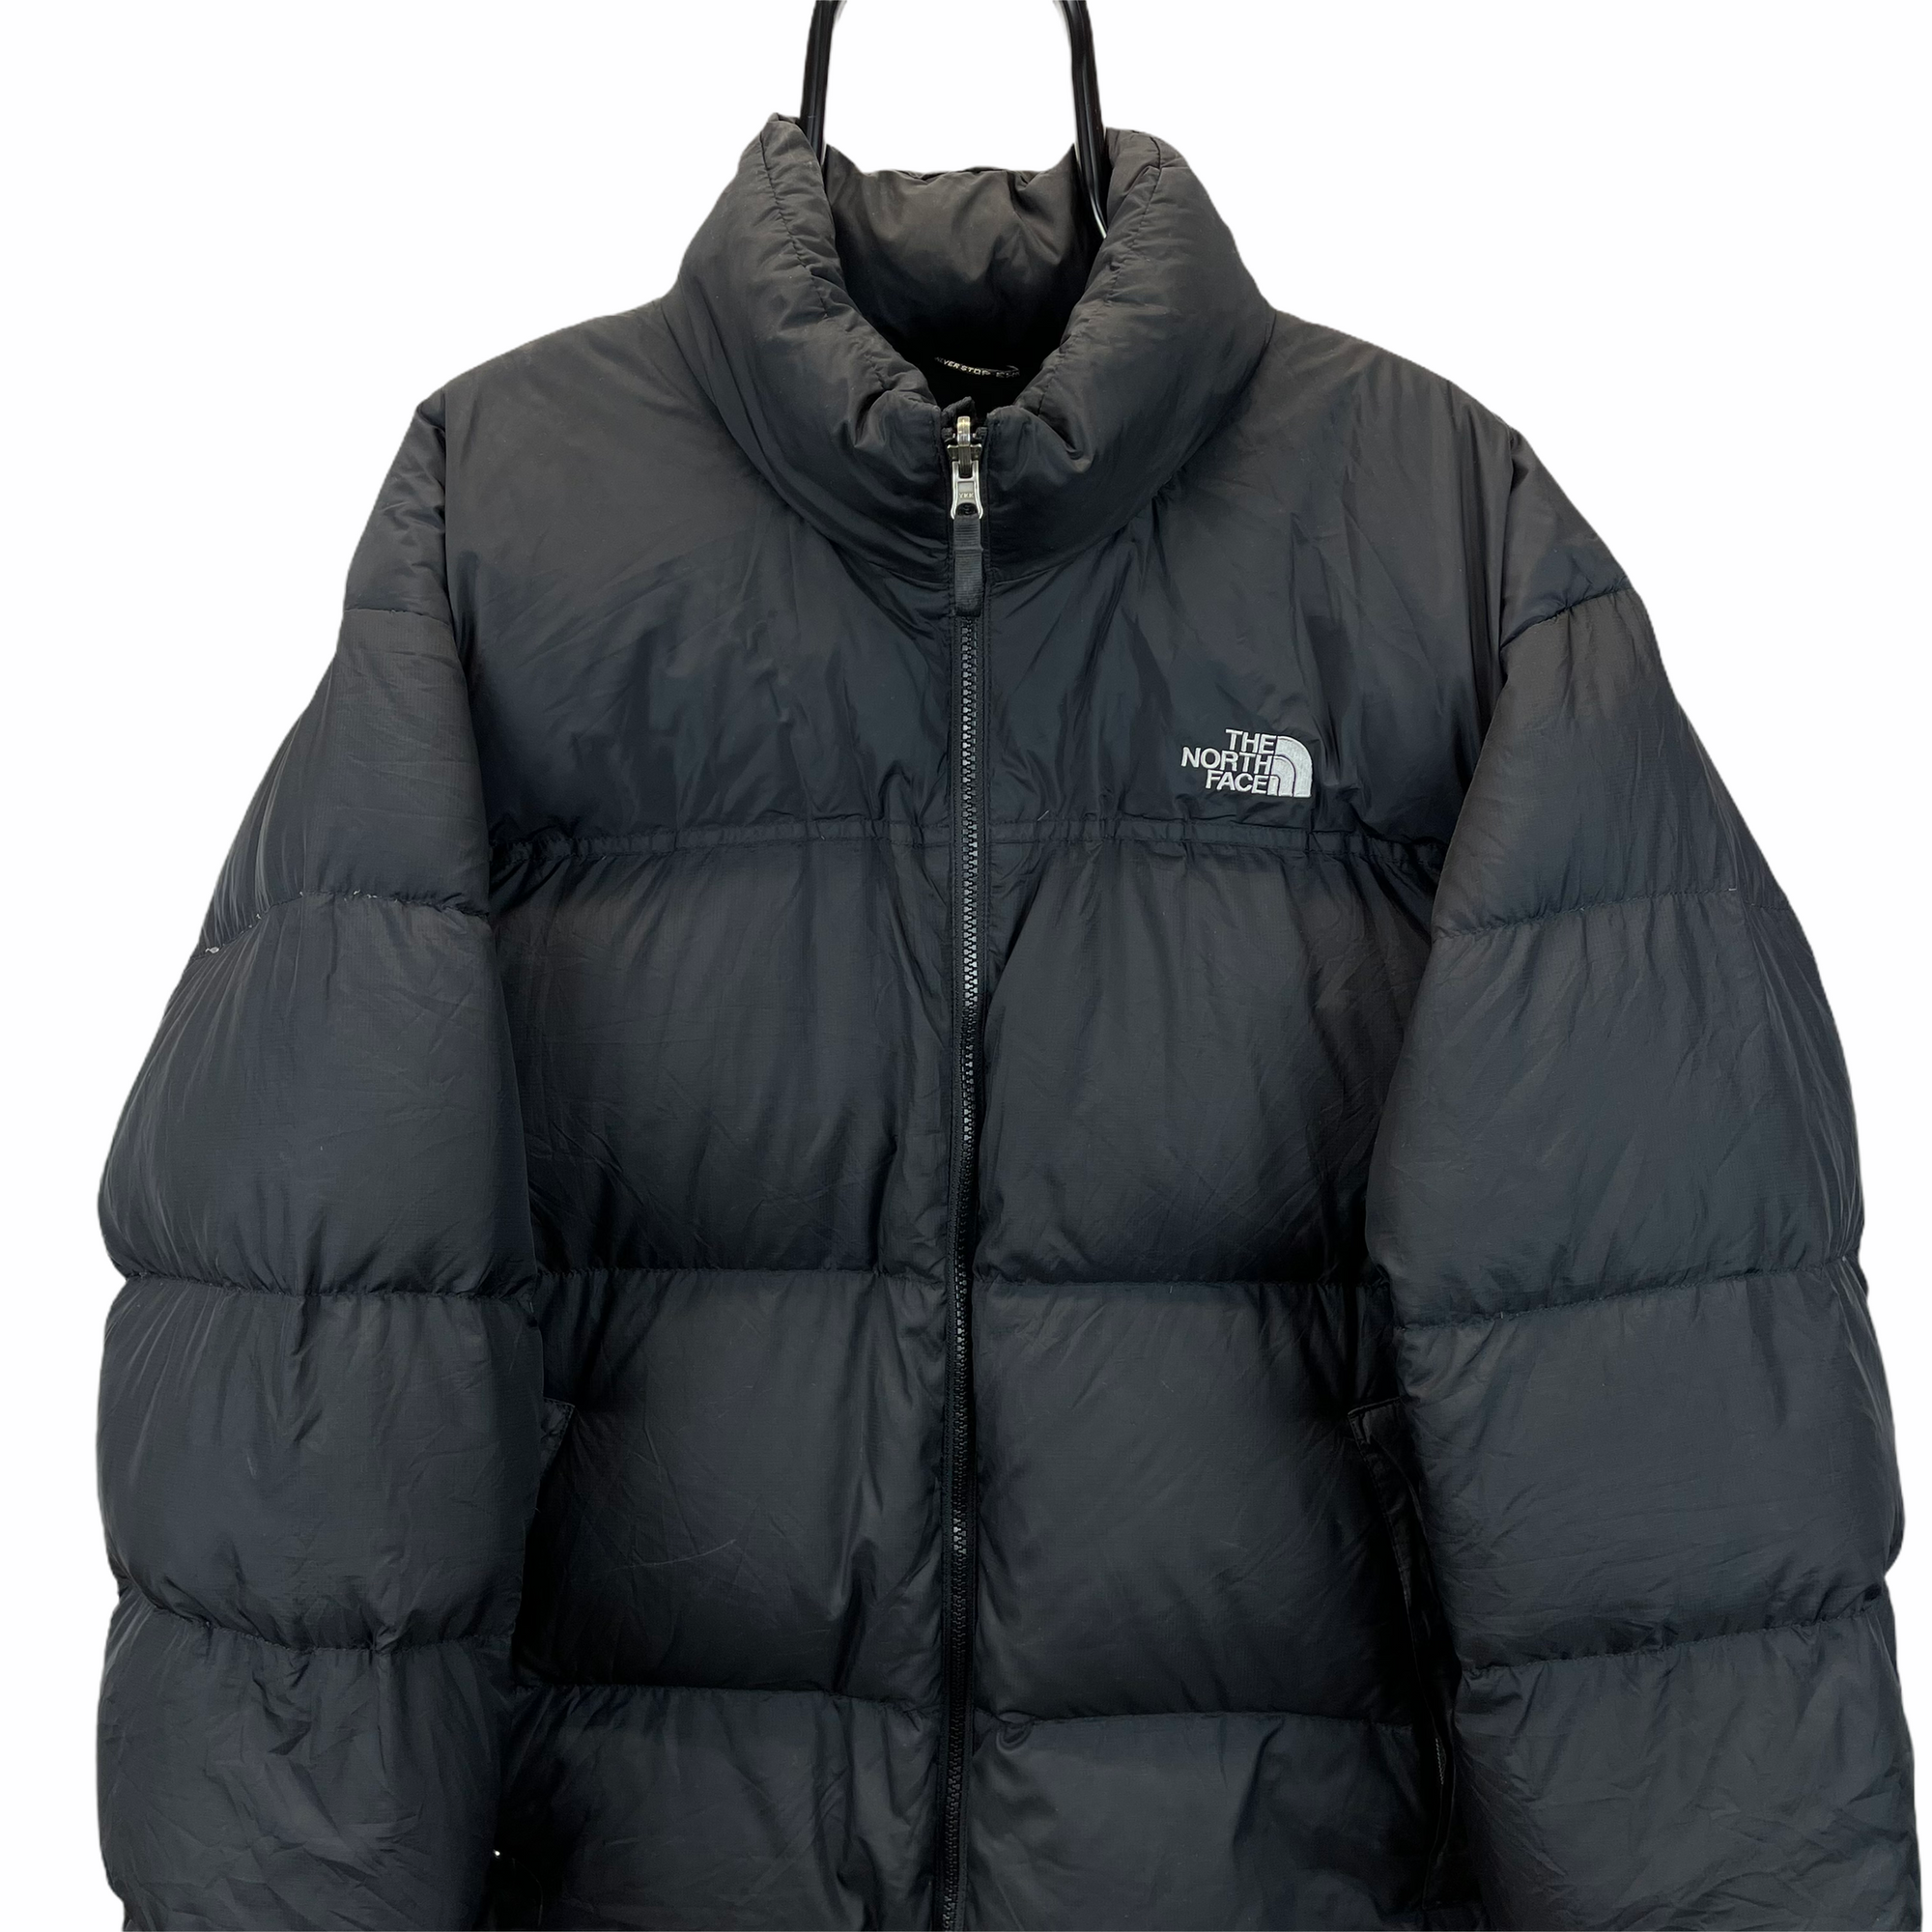 The North Face Nuptse 700 Down Puffer Jacket in Black - Men's XL/Women's XXL